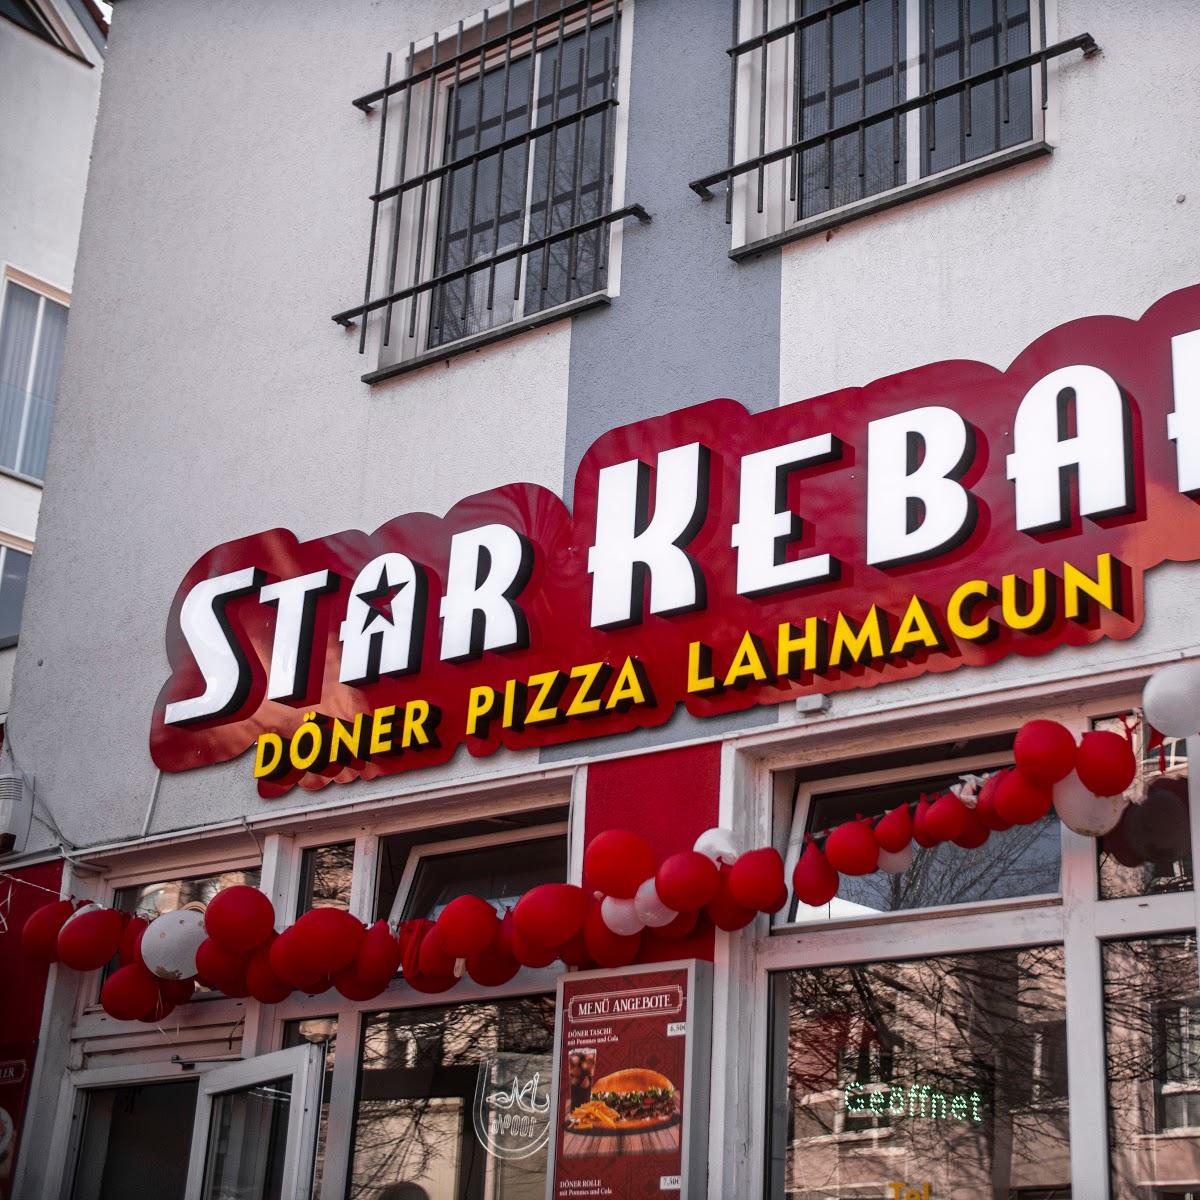 Restaurant "Star Kebap" in Hannover